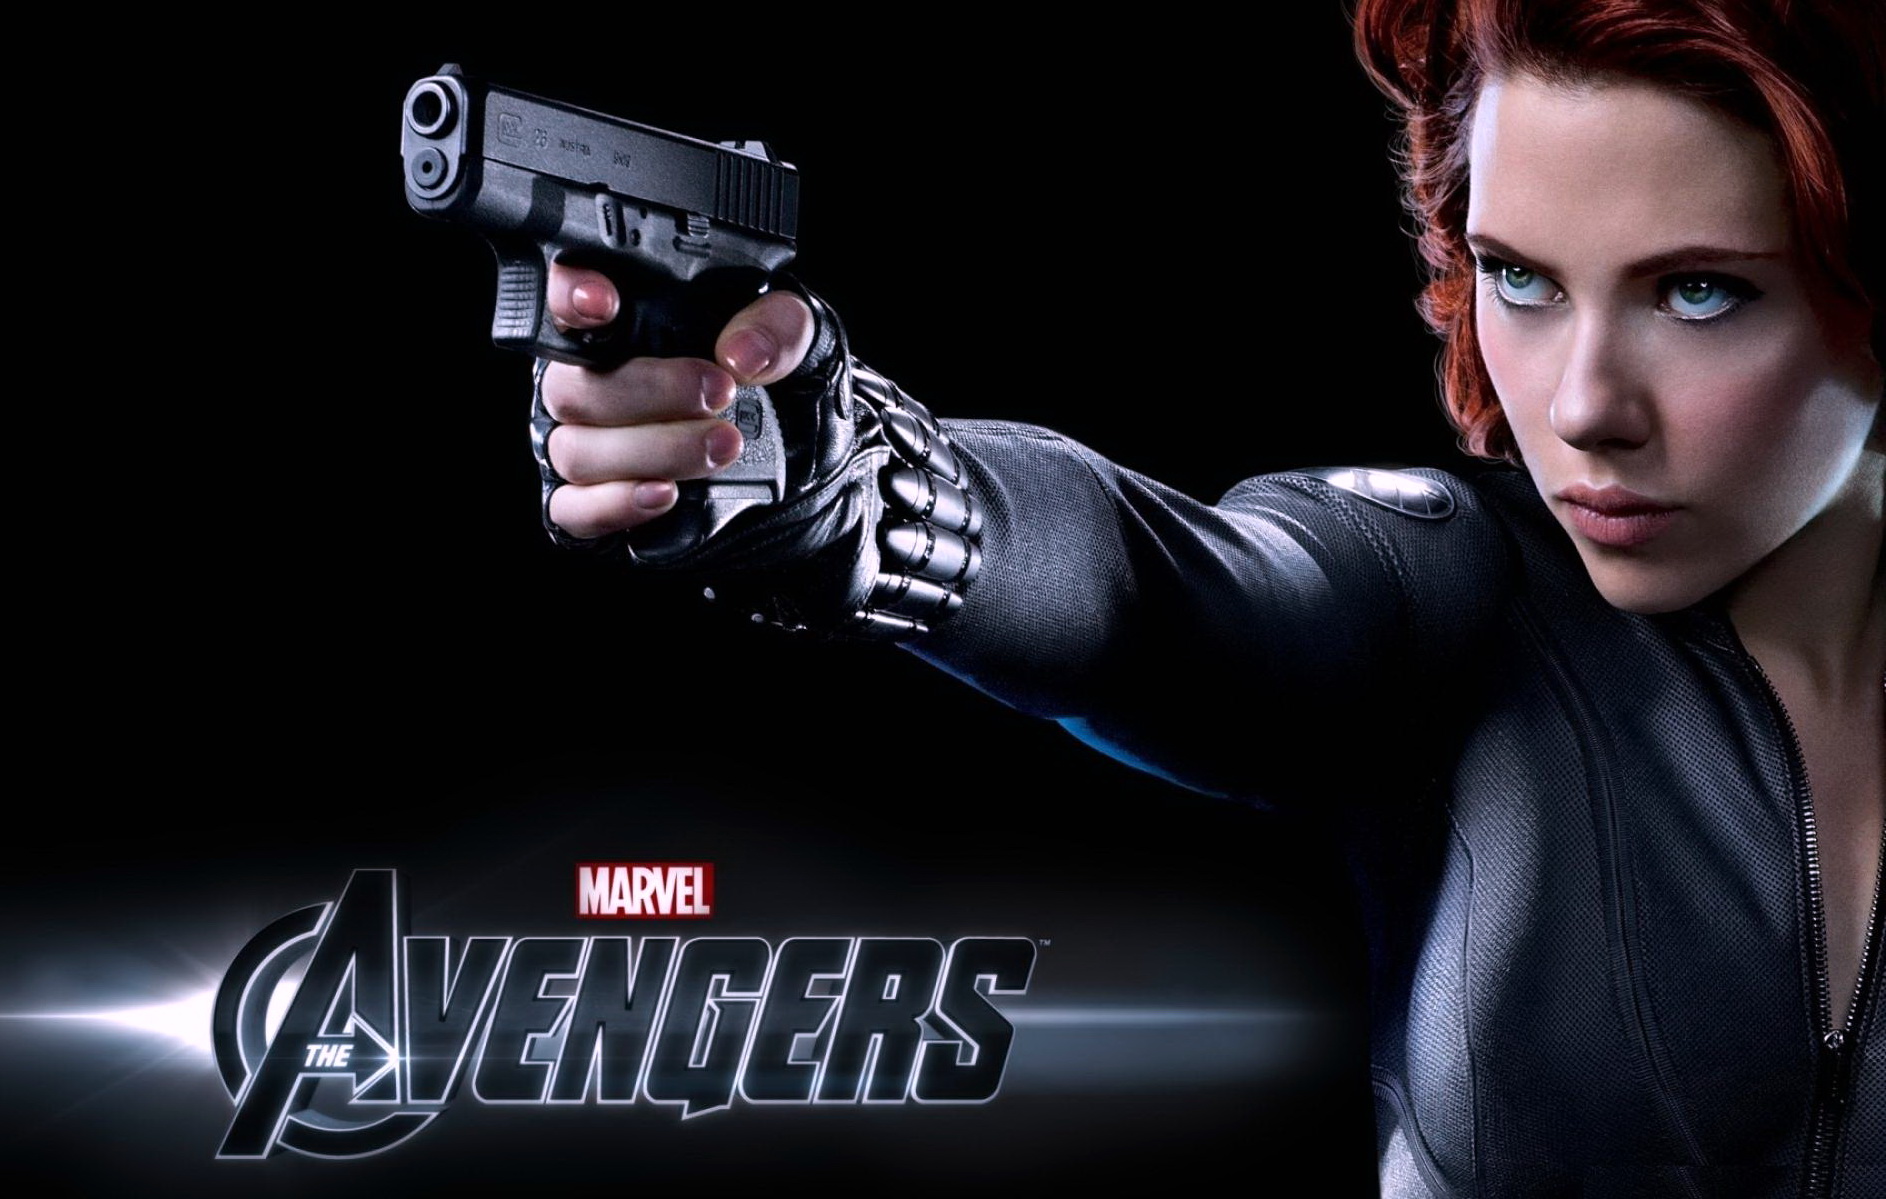 Black Widow from The Avengers, with handgun